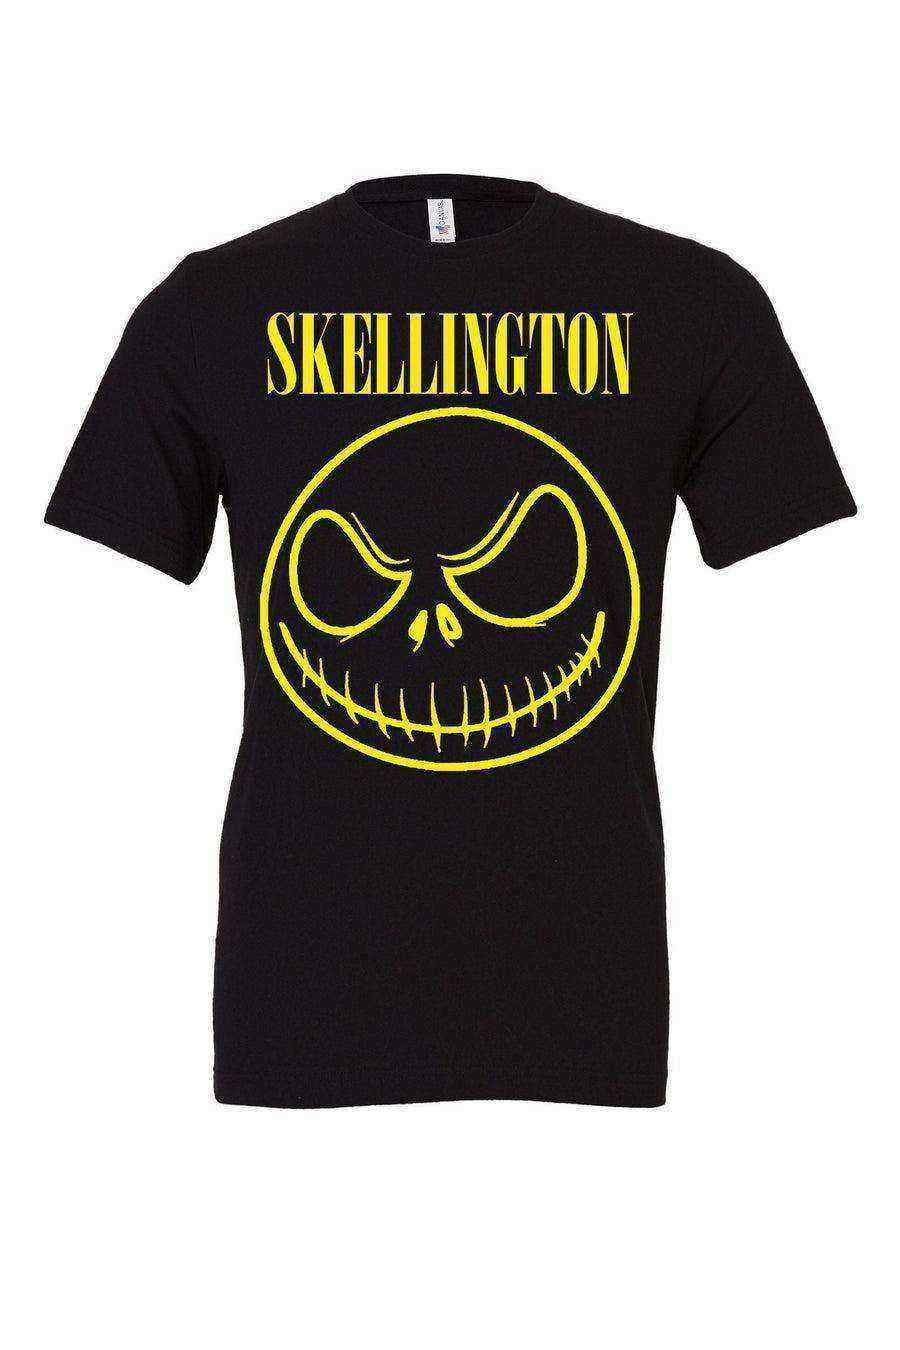 Skellington/Nirvana Tee | Nightmare Before Christmas Shirt | Halloween Shirt - Dylan's Tees